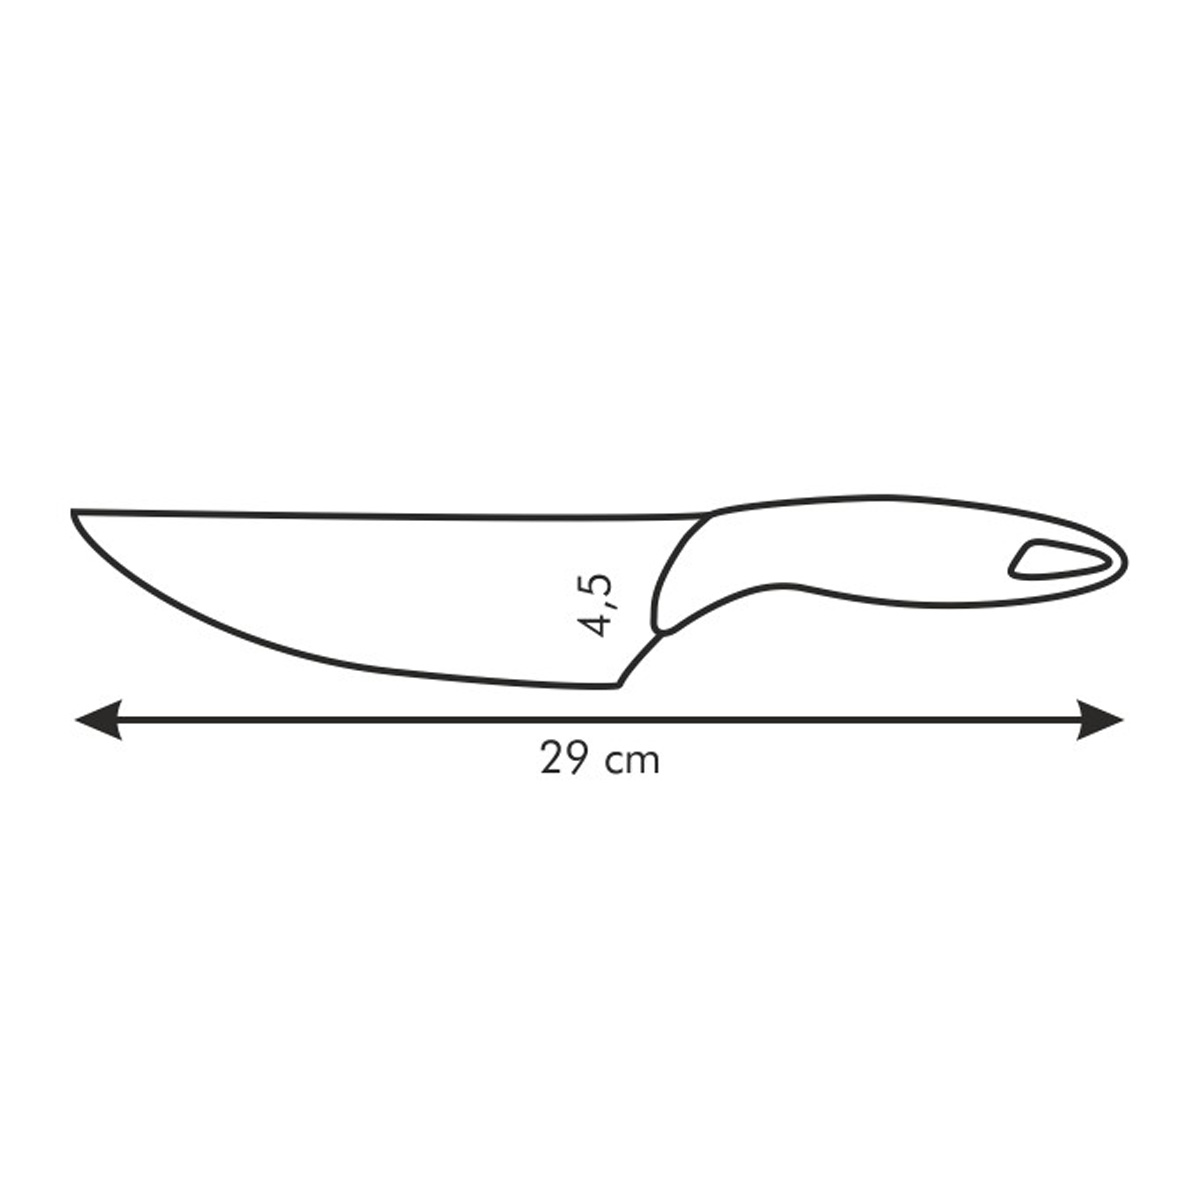 Nóż kuchenny  PRESTO, 17 cm